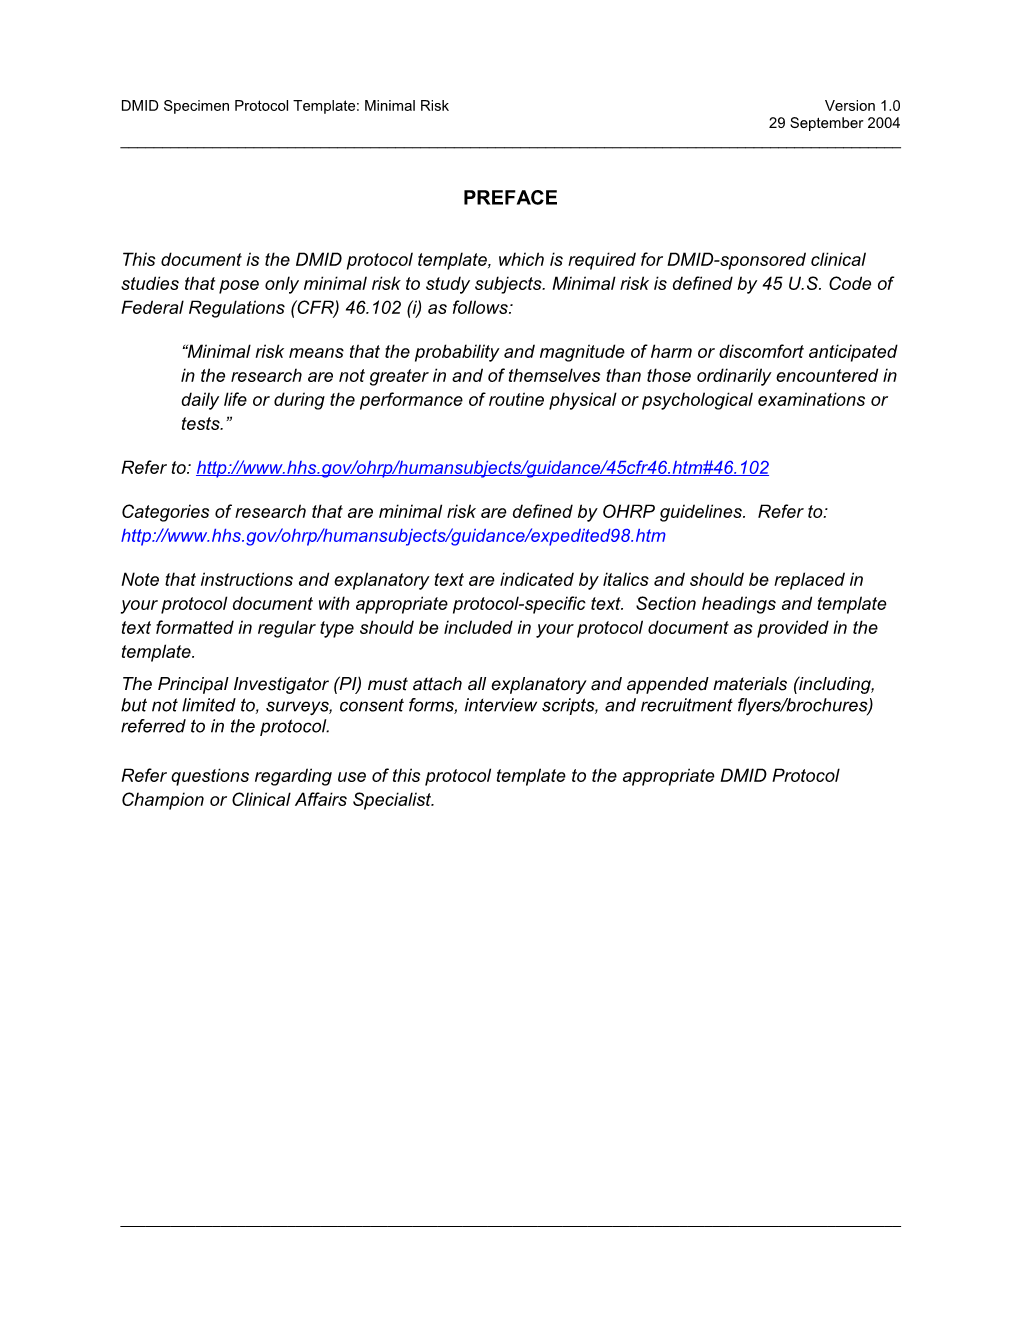 DMID Specimen Protocol Template: Minimal Risk, Version 1.0, September 29, 2004